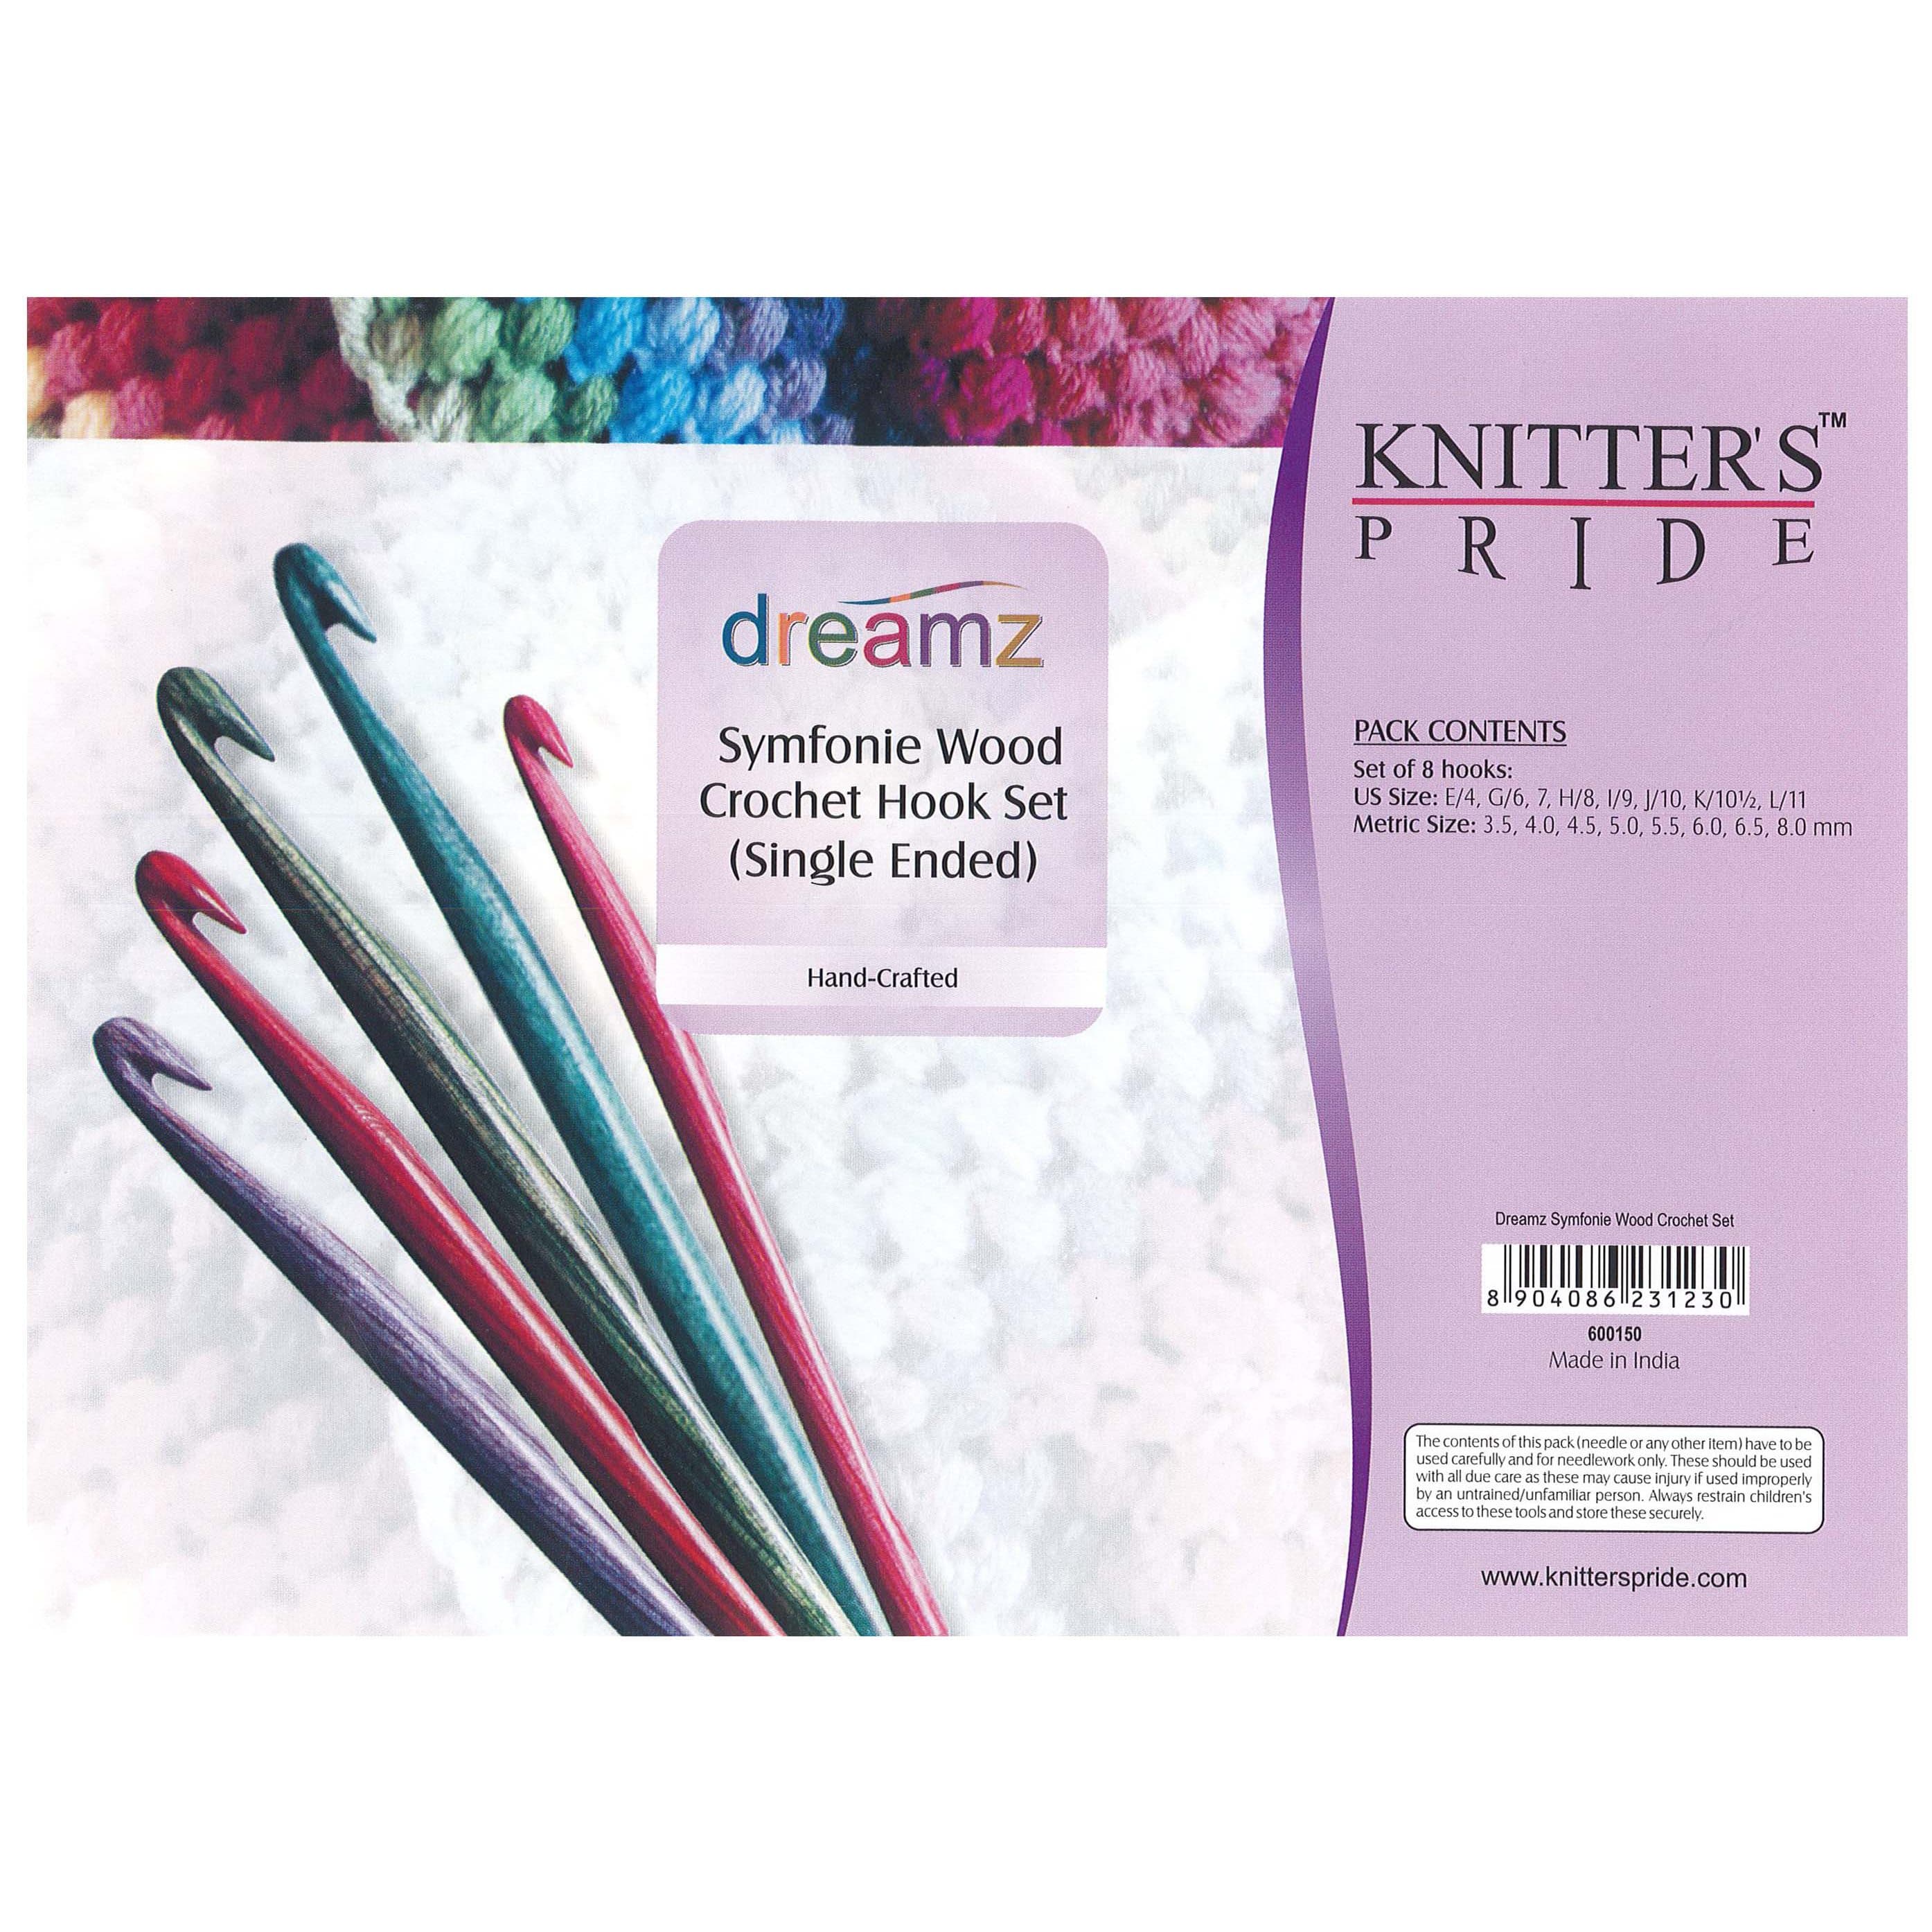 Knitter's Pride™ Dreamz Symfonie Wood Crochet Hook Set